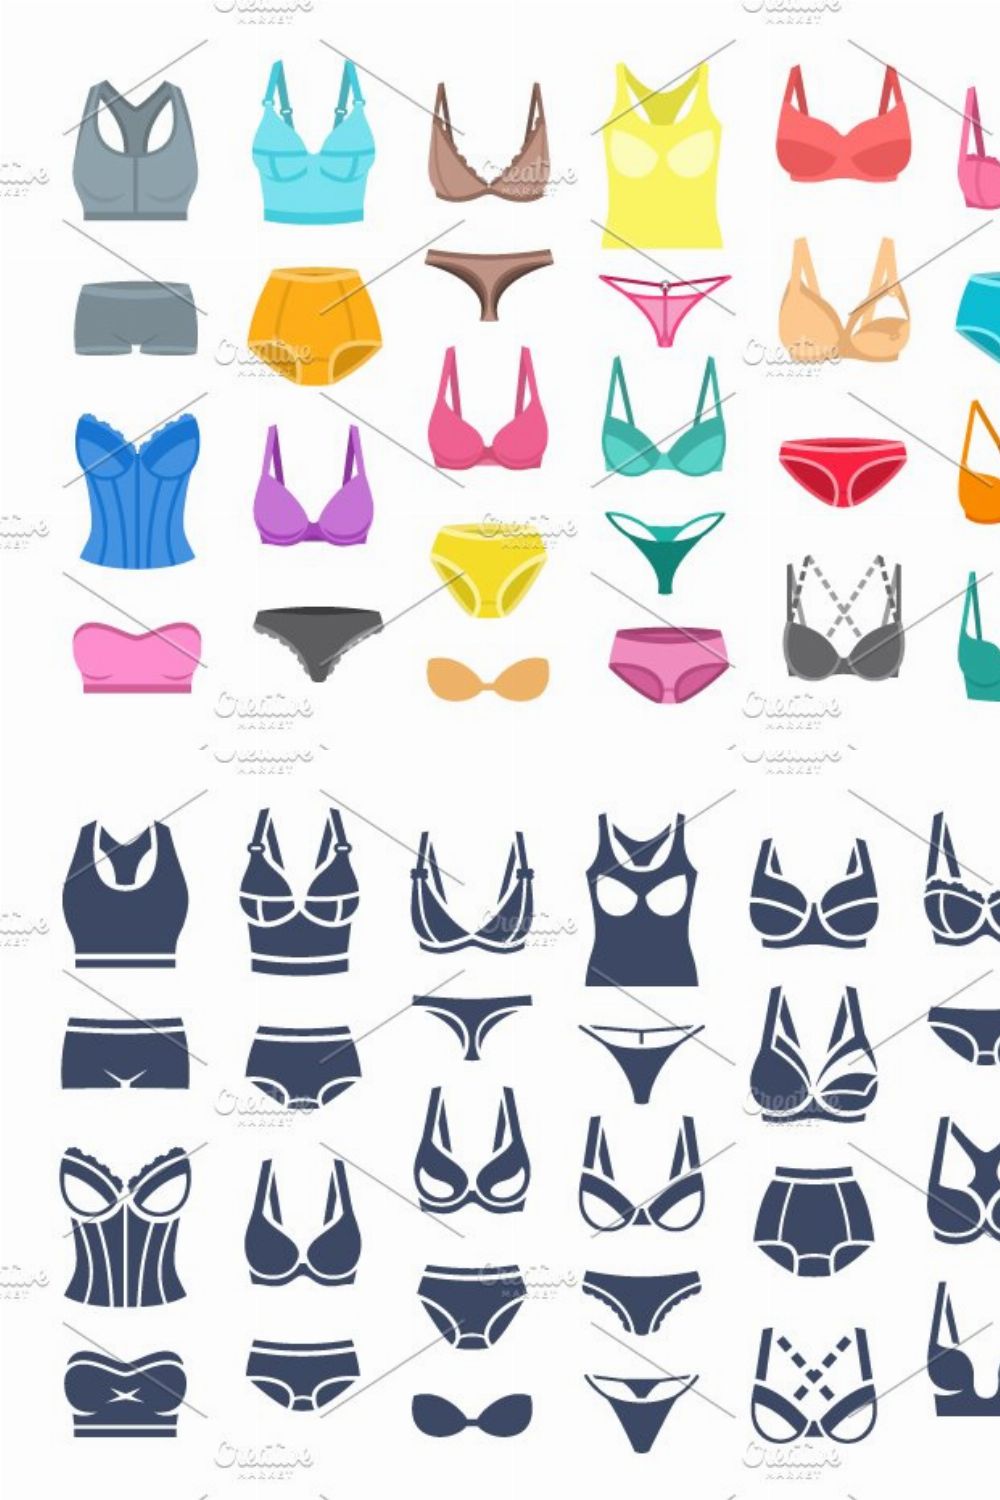 Women underwear design flat icons pinterest preview image.